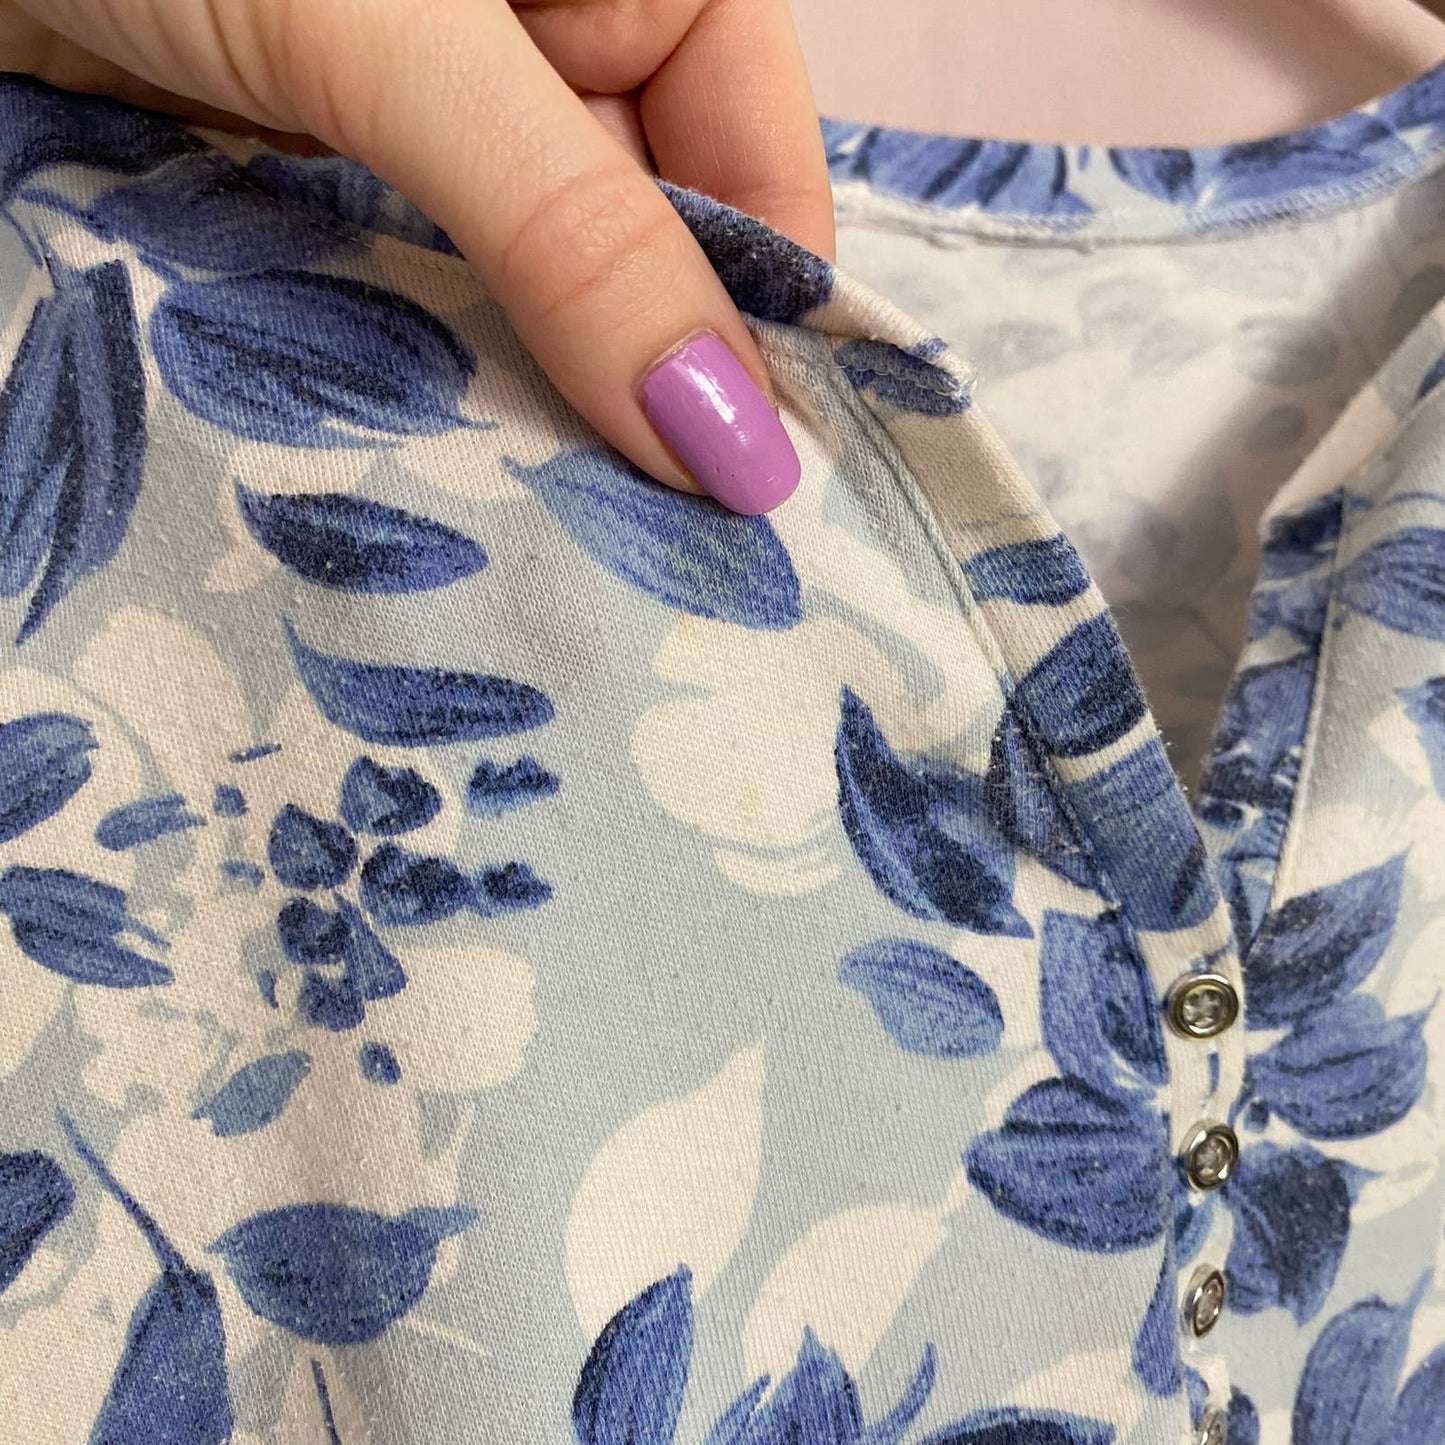 Vintage Blue Floral Print Short Sleeve Blouse, Size Medium